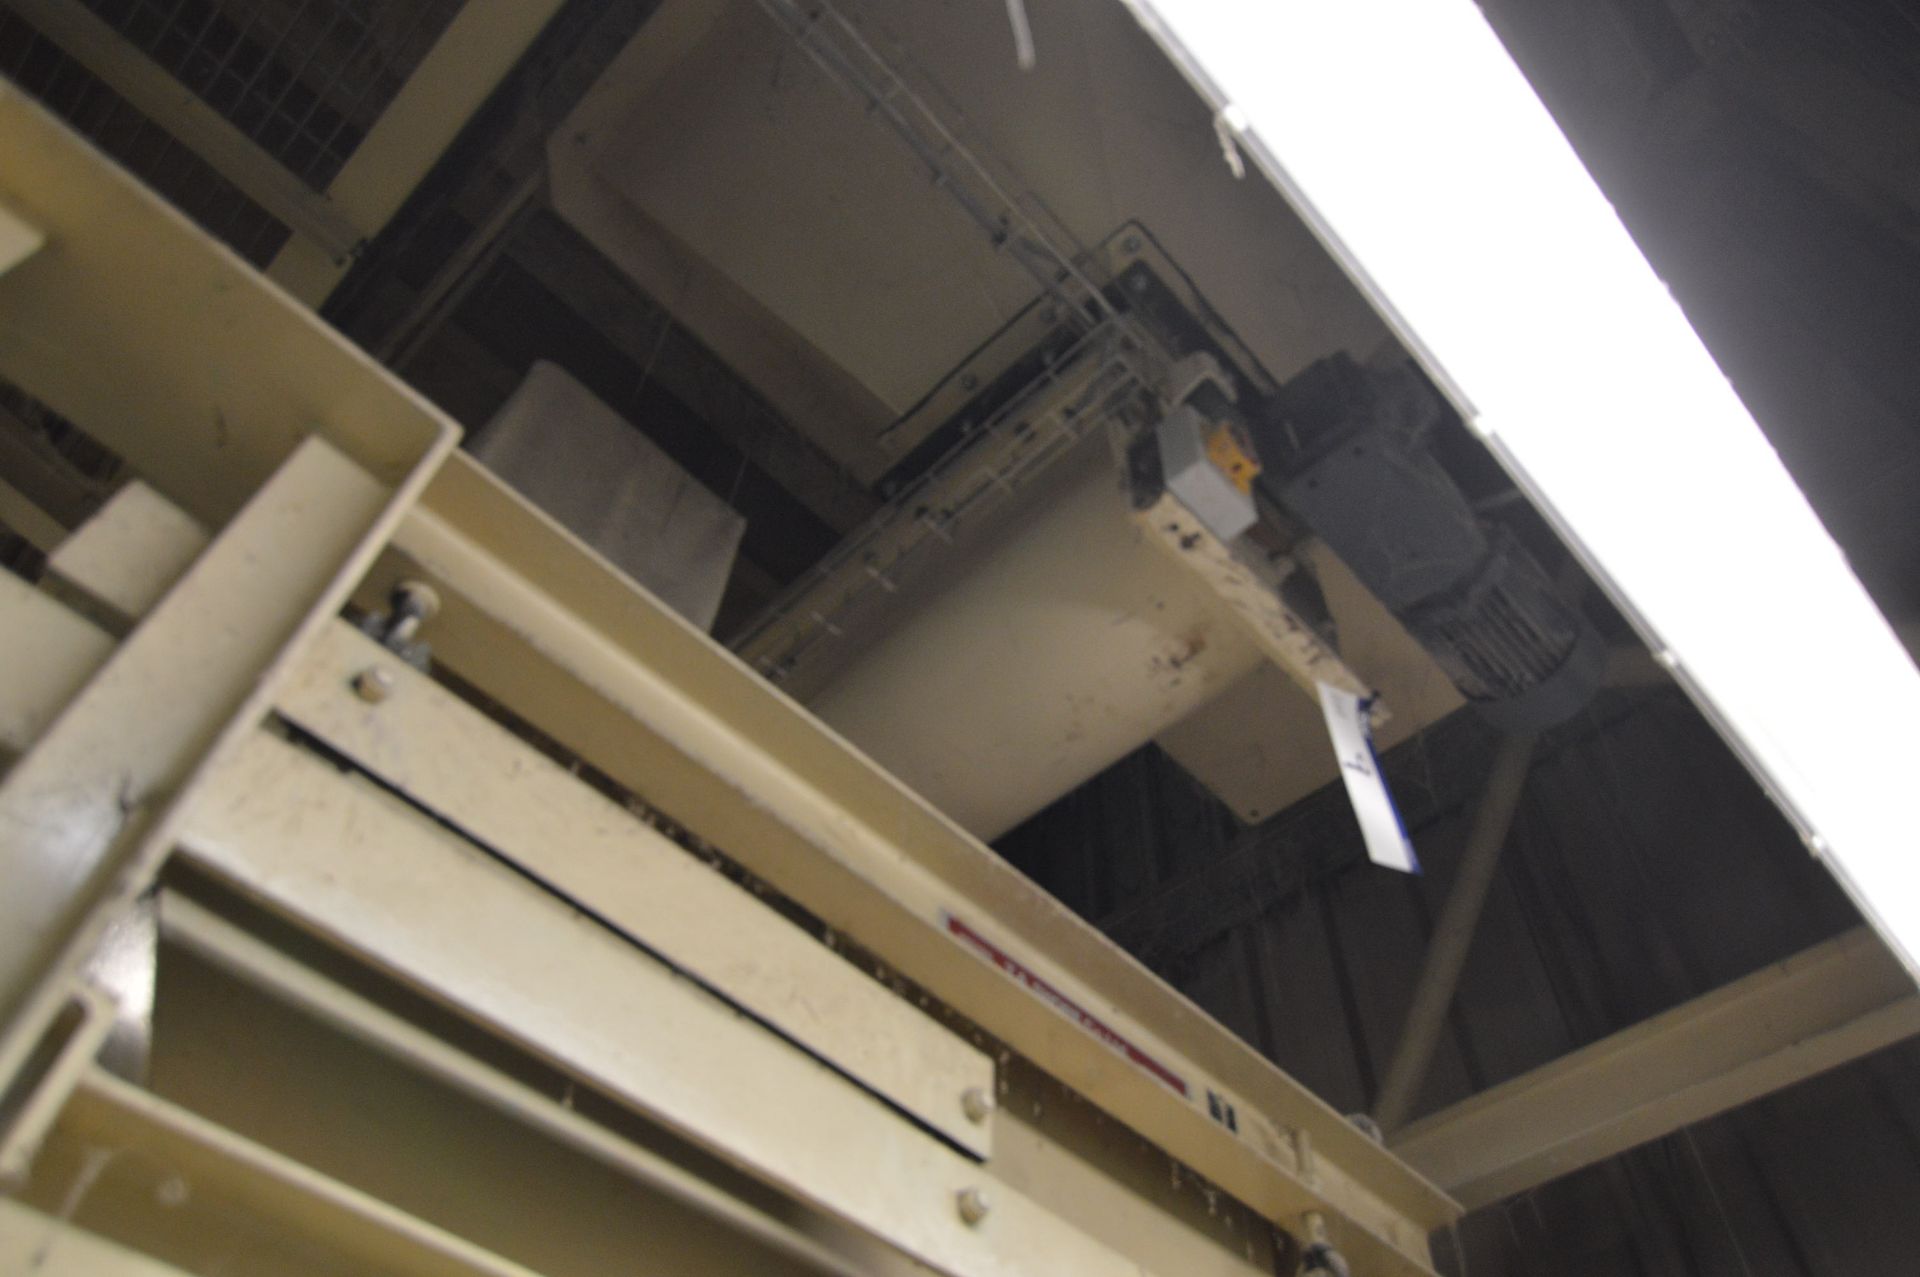 Guttridge 300mm dia. Screw Conveyor, serial no. 0570616-2-1 C6, 1.3m long, year of manufacture 2011, - Image 2 of 2